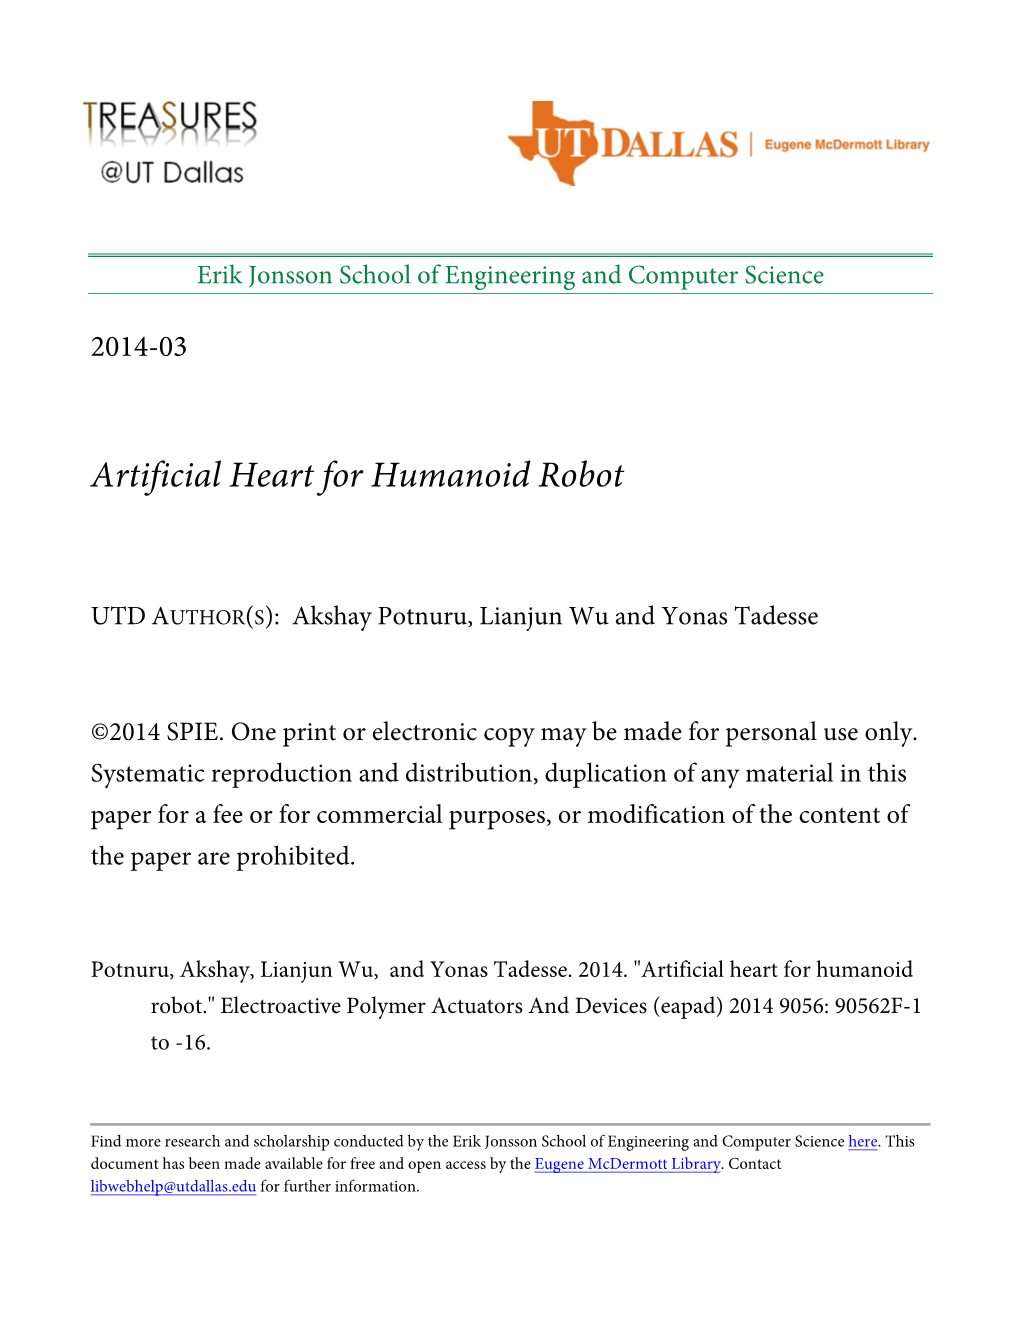 Artificial Heart for Humanoid Robot